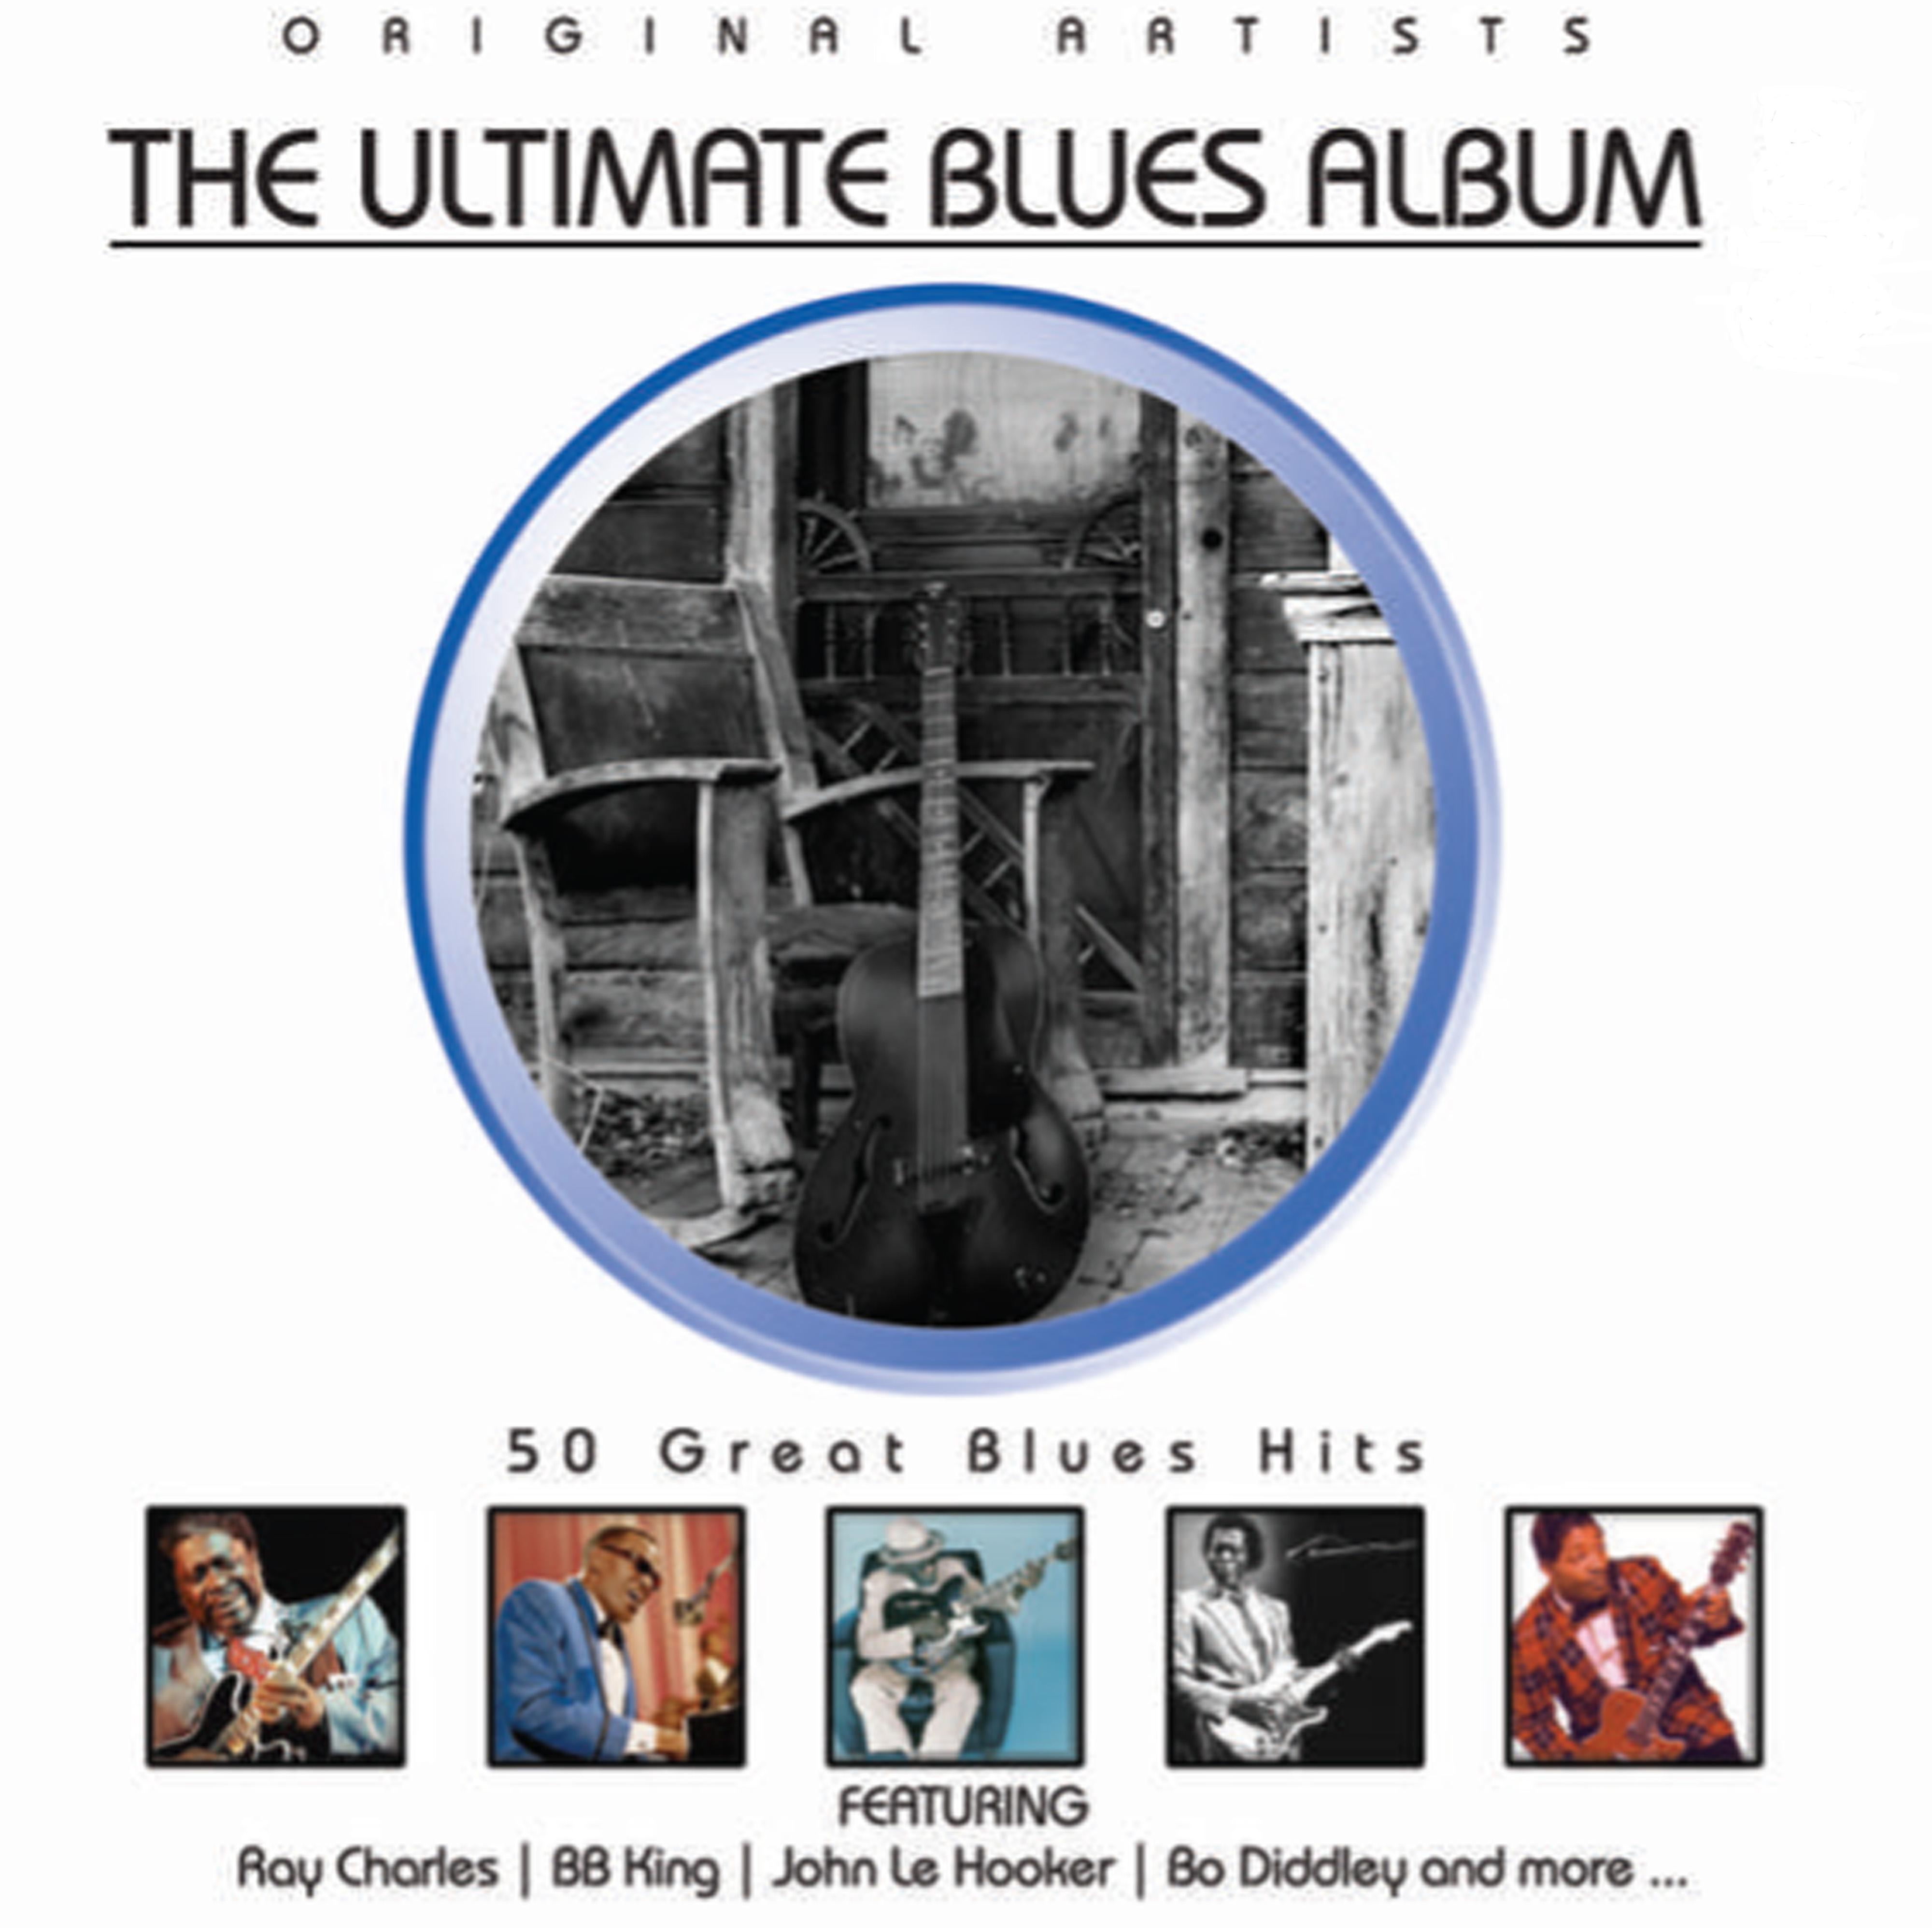 The Ultimate Blues Album